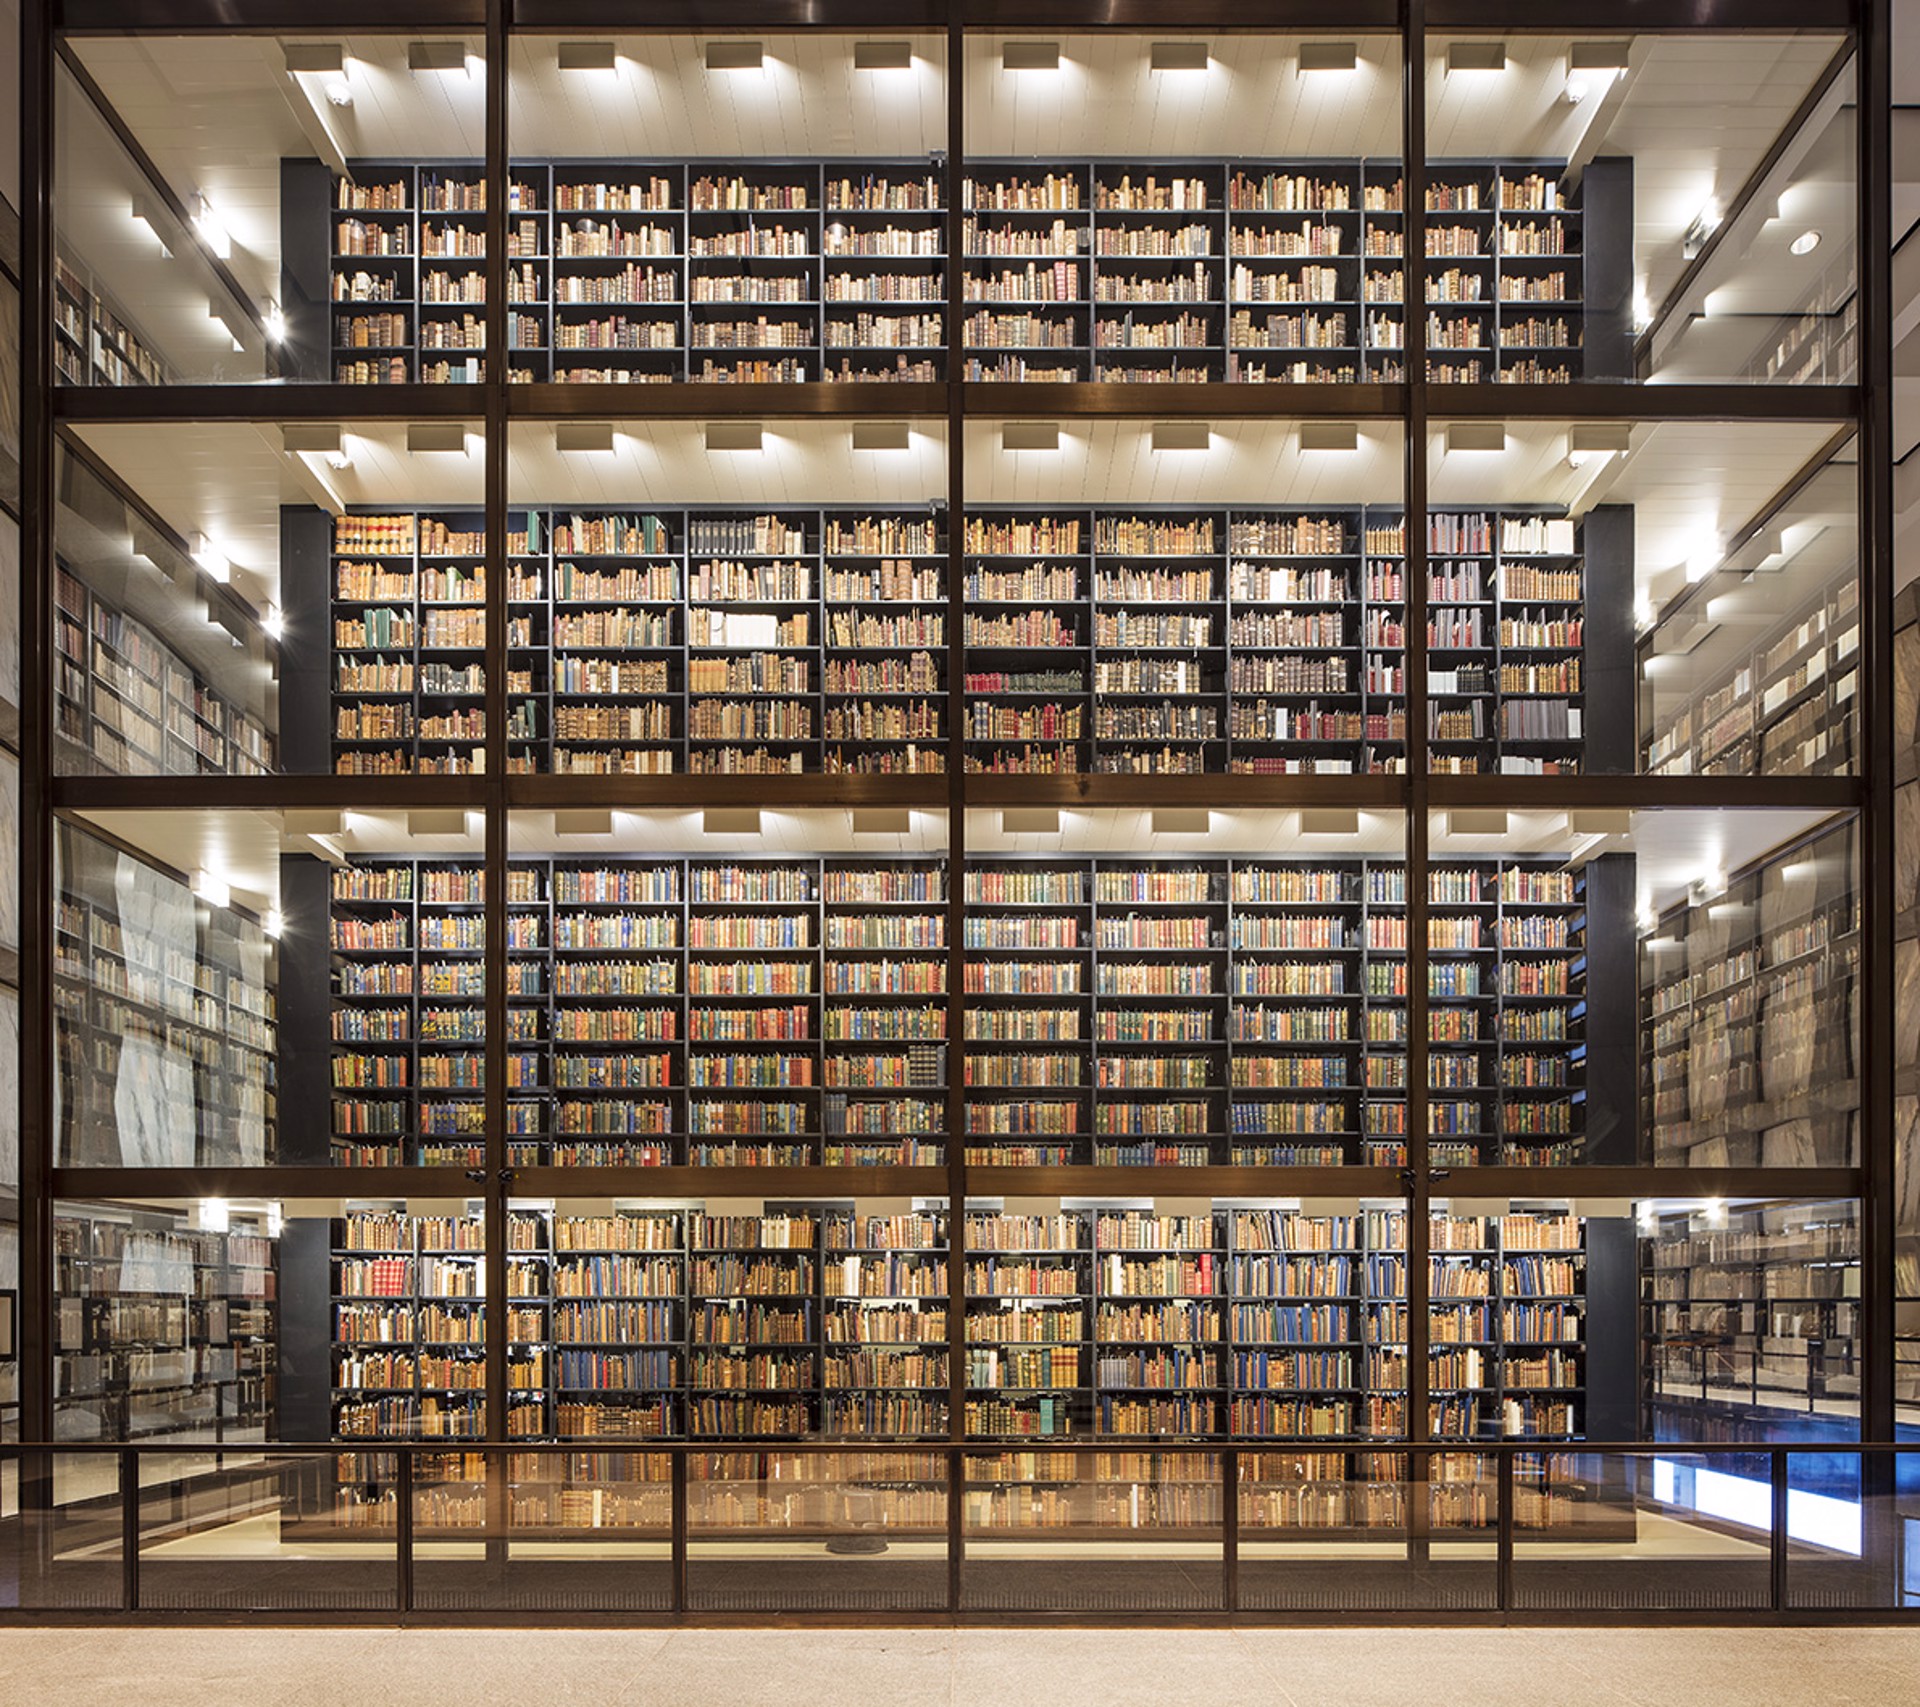 Beinecke Library, New Haven CT, USA by Reinhard Goerner